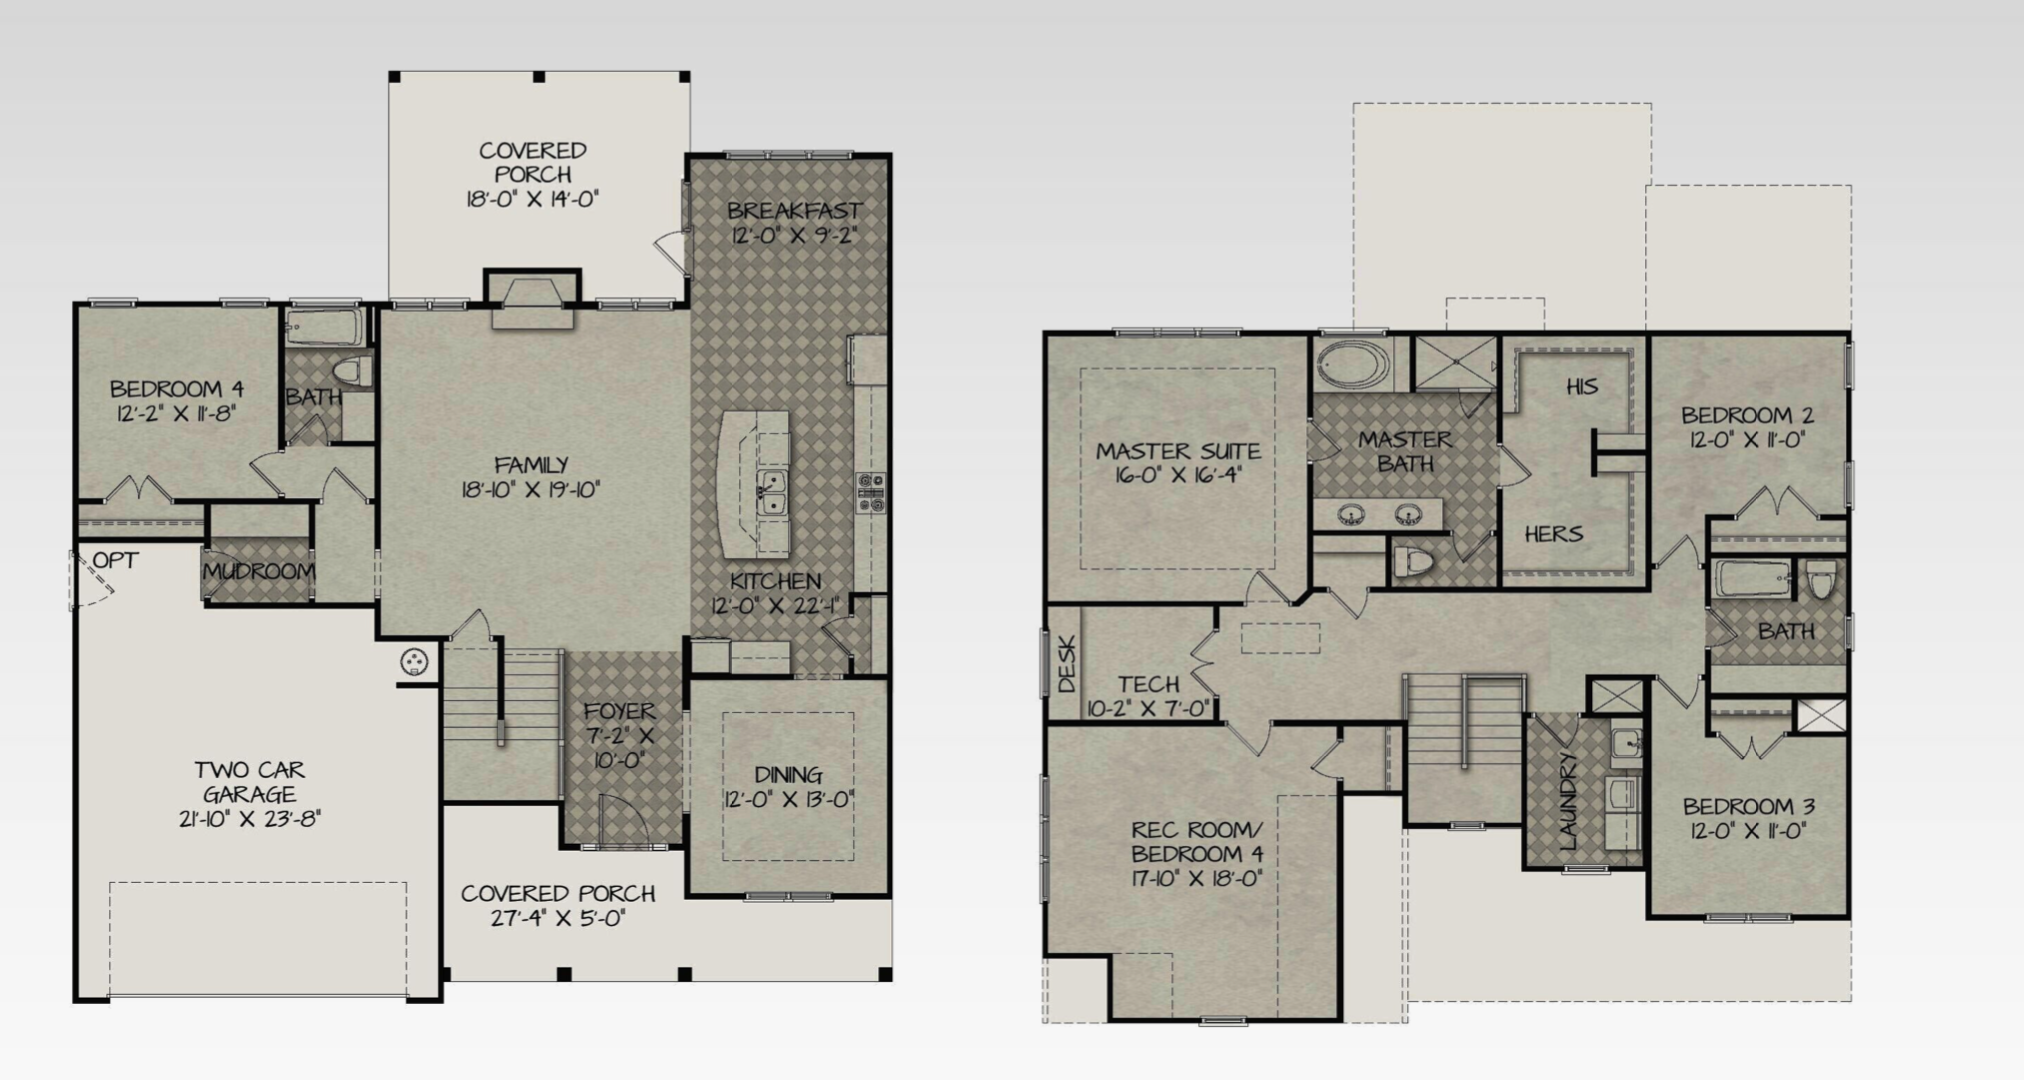 The Masonboro floor plan image